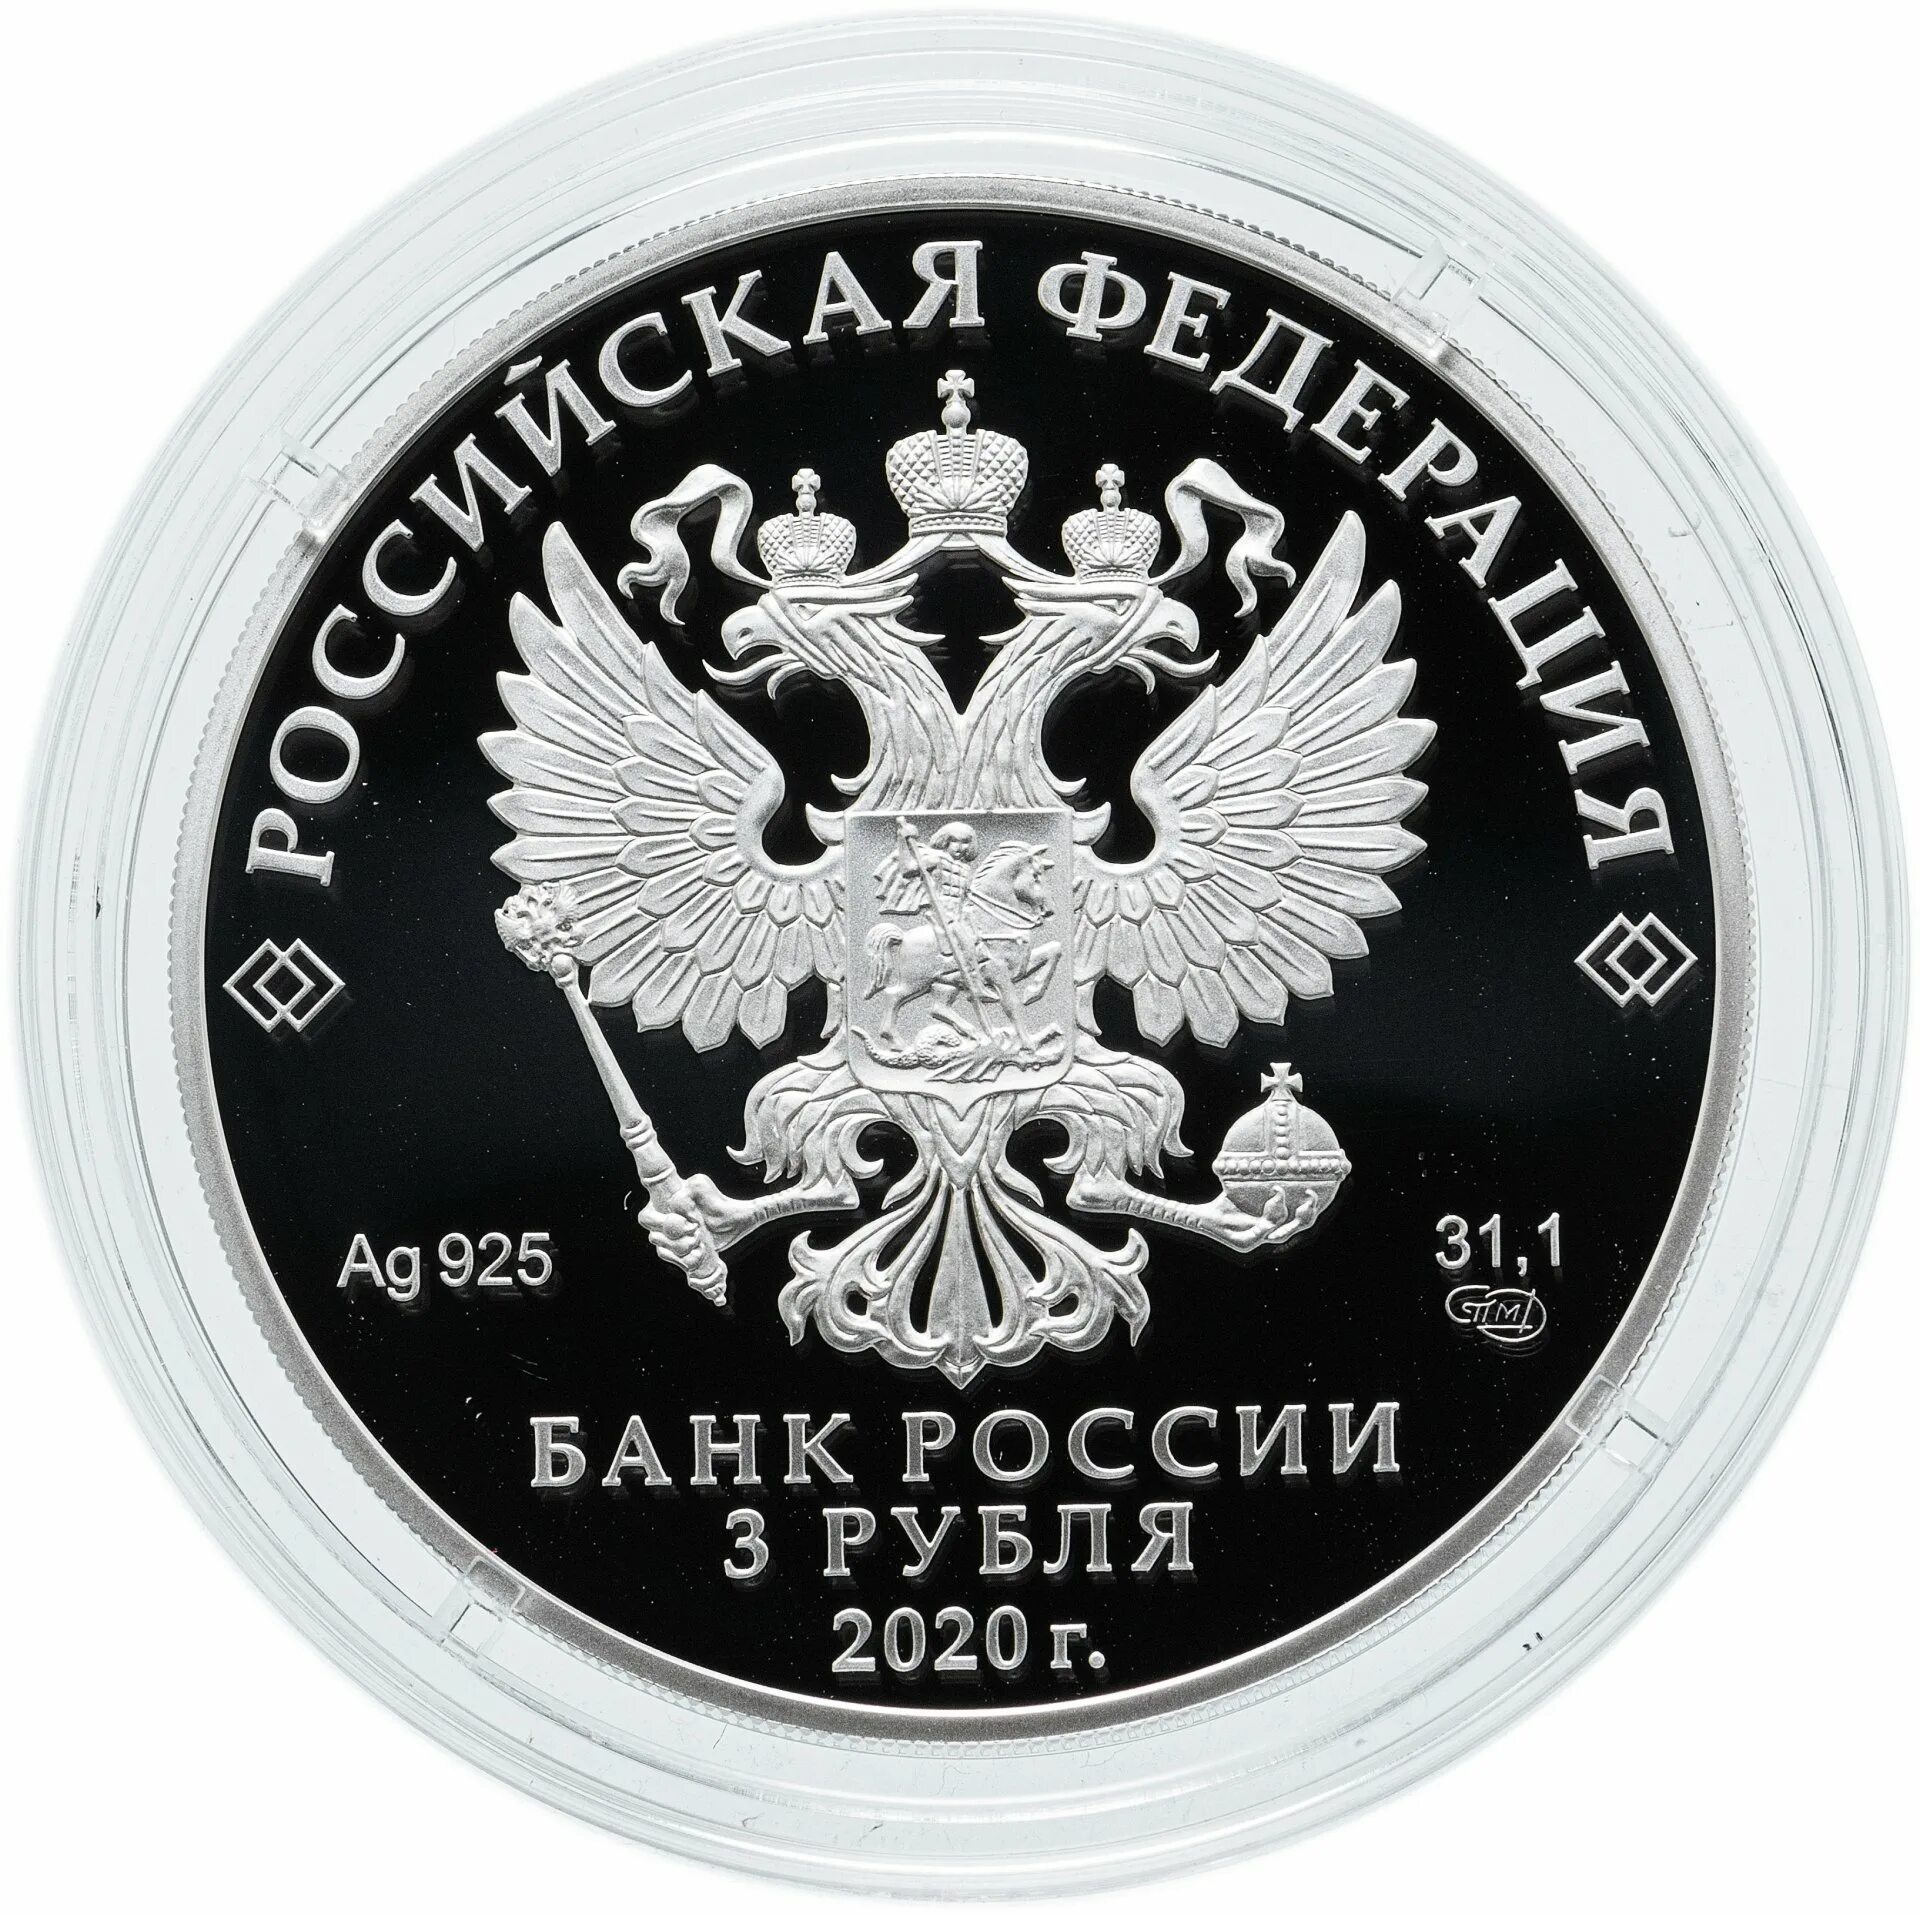 Цб рф серебро. Монета РФ 1 рубль 2020 года. 3 Рубля 2016. Монета РФ 1 рубль 2017 года. Банк России 2 рубля 2020.